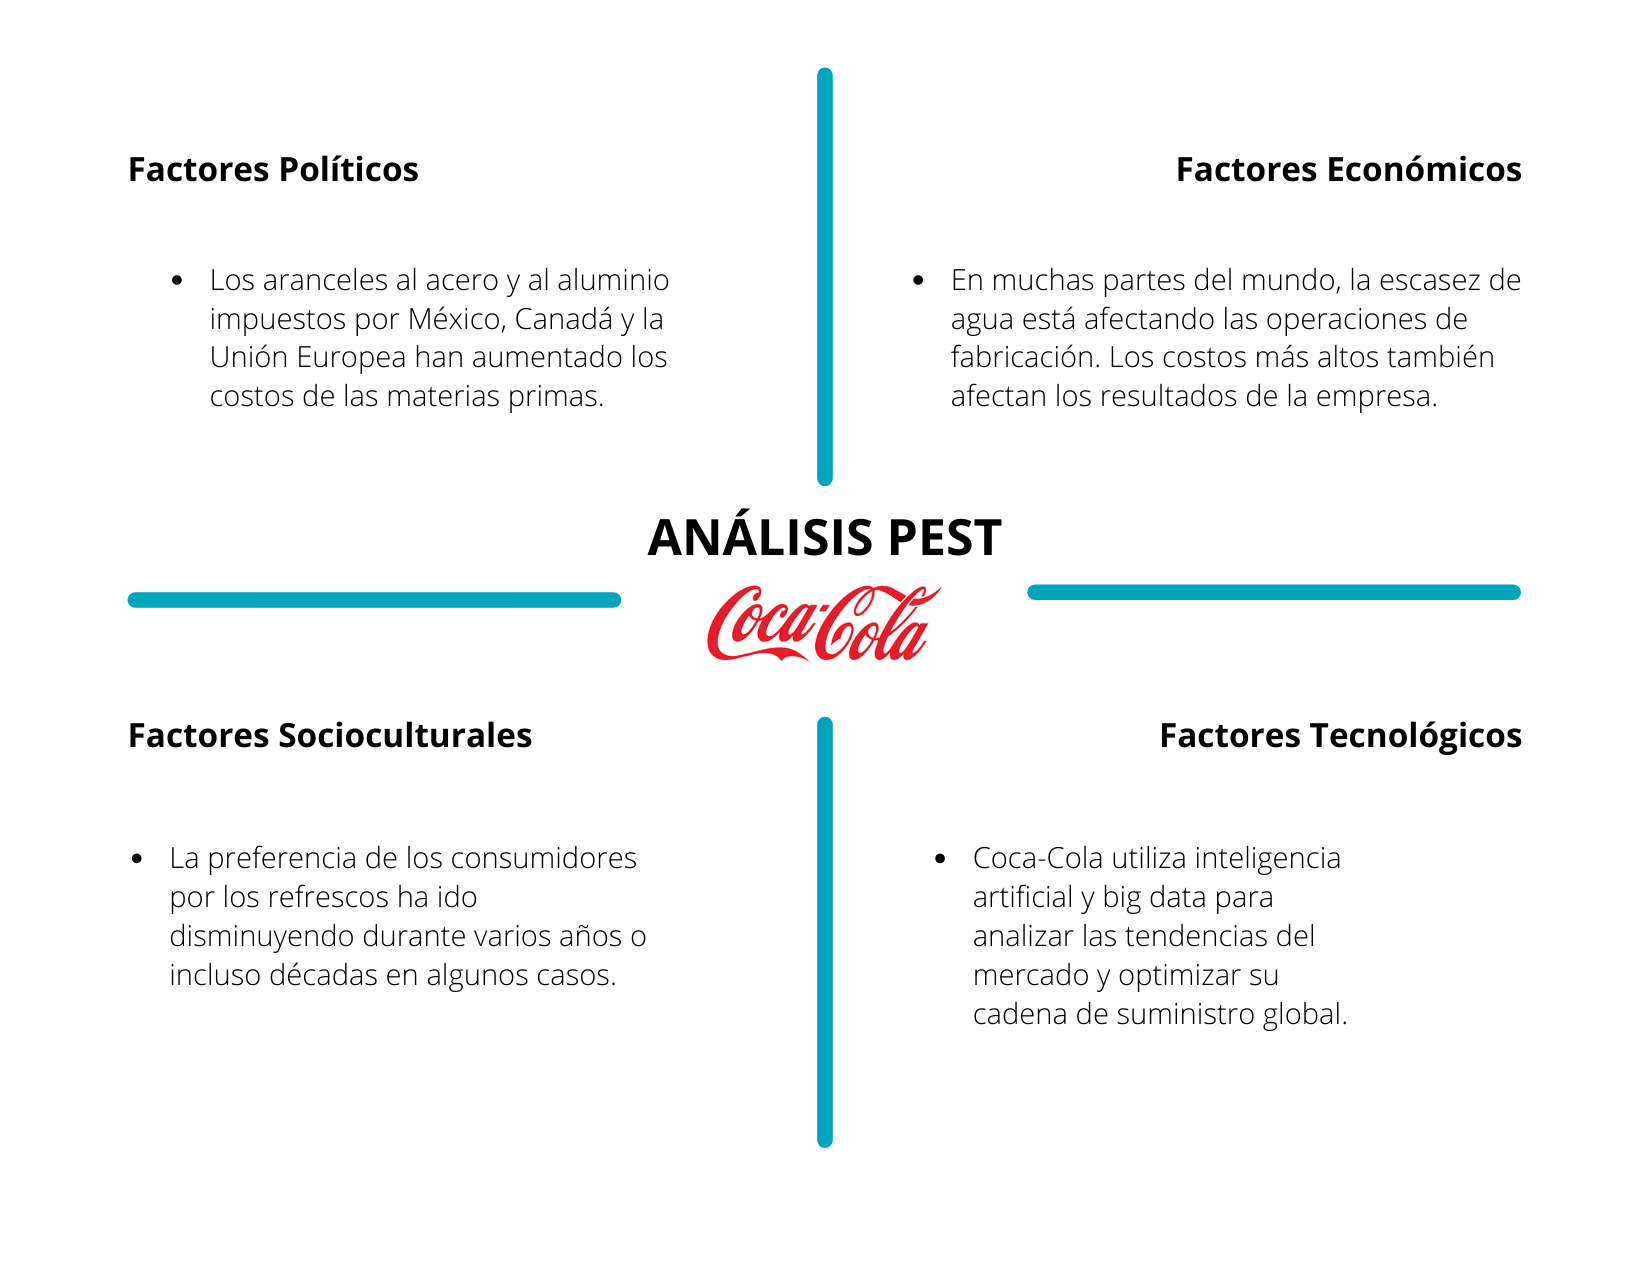 Ejemplo de análisis PEST de Coca-Cola